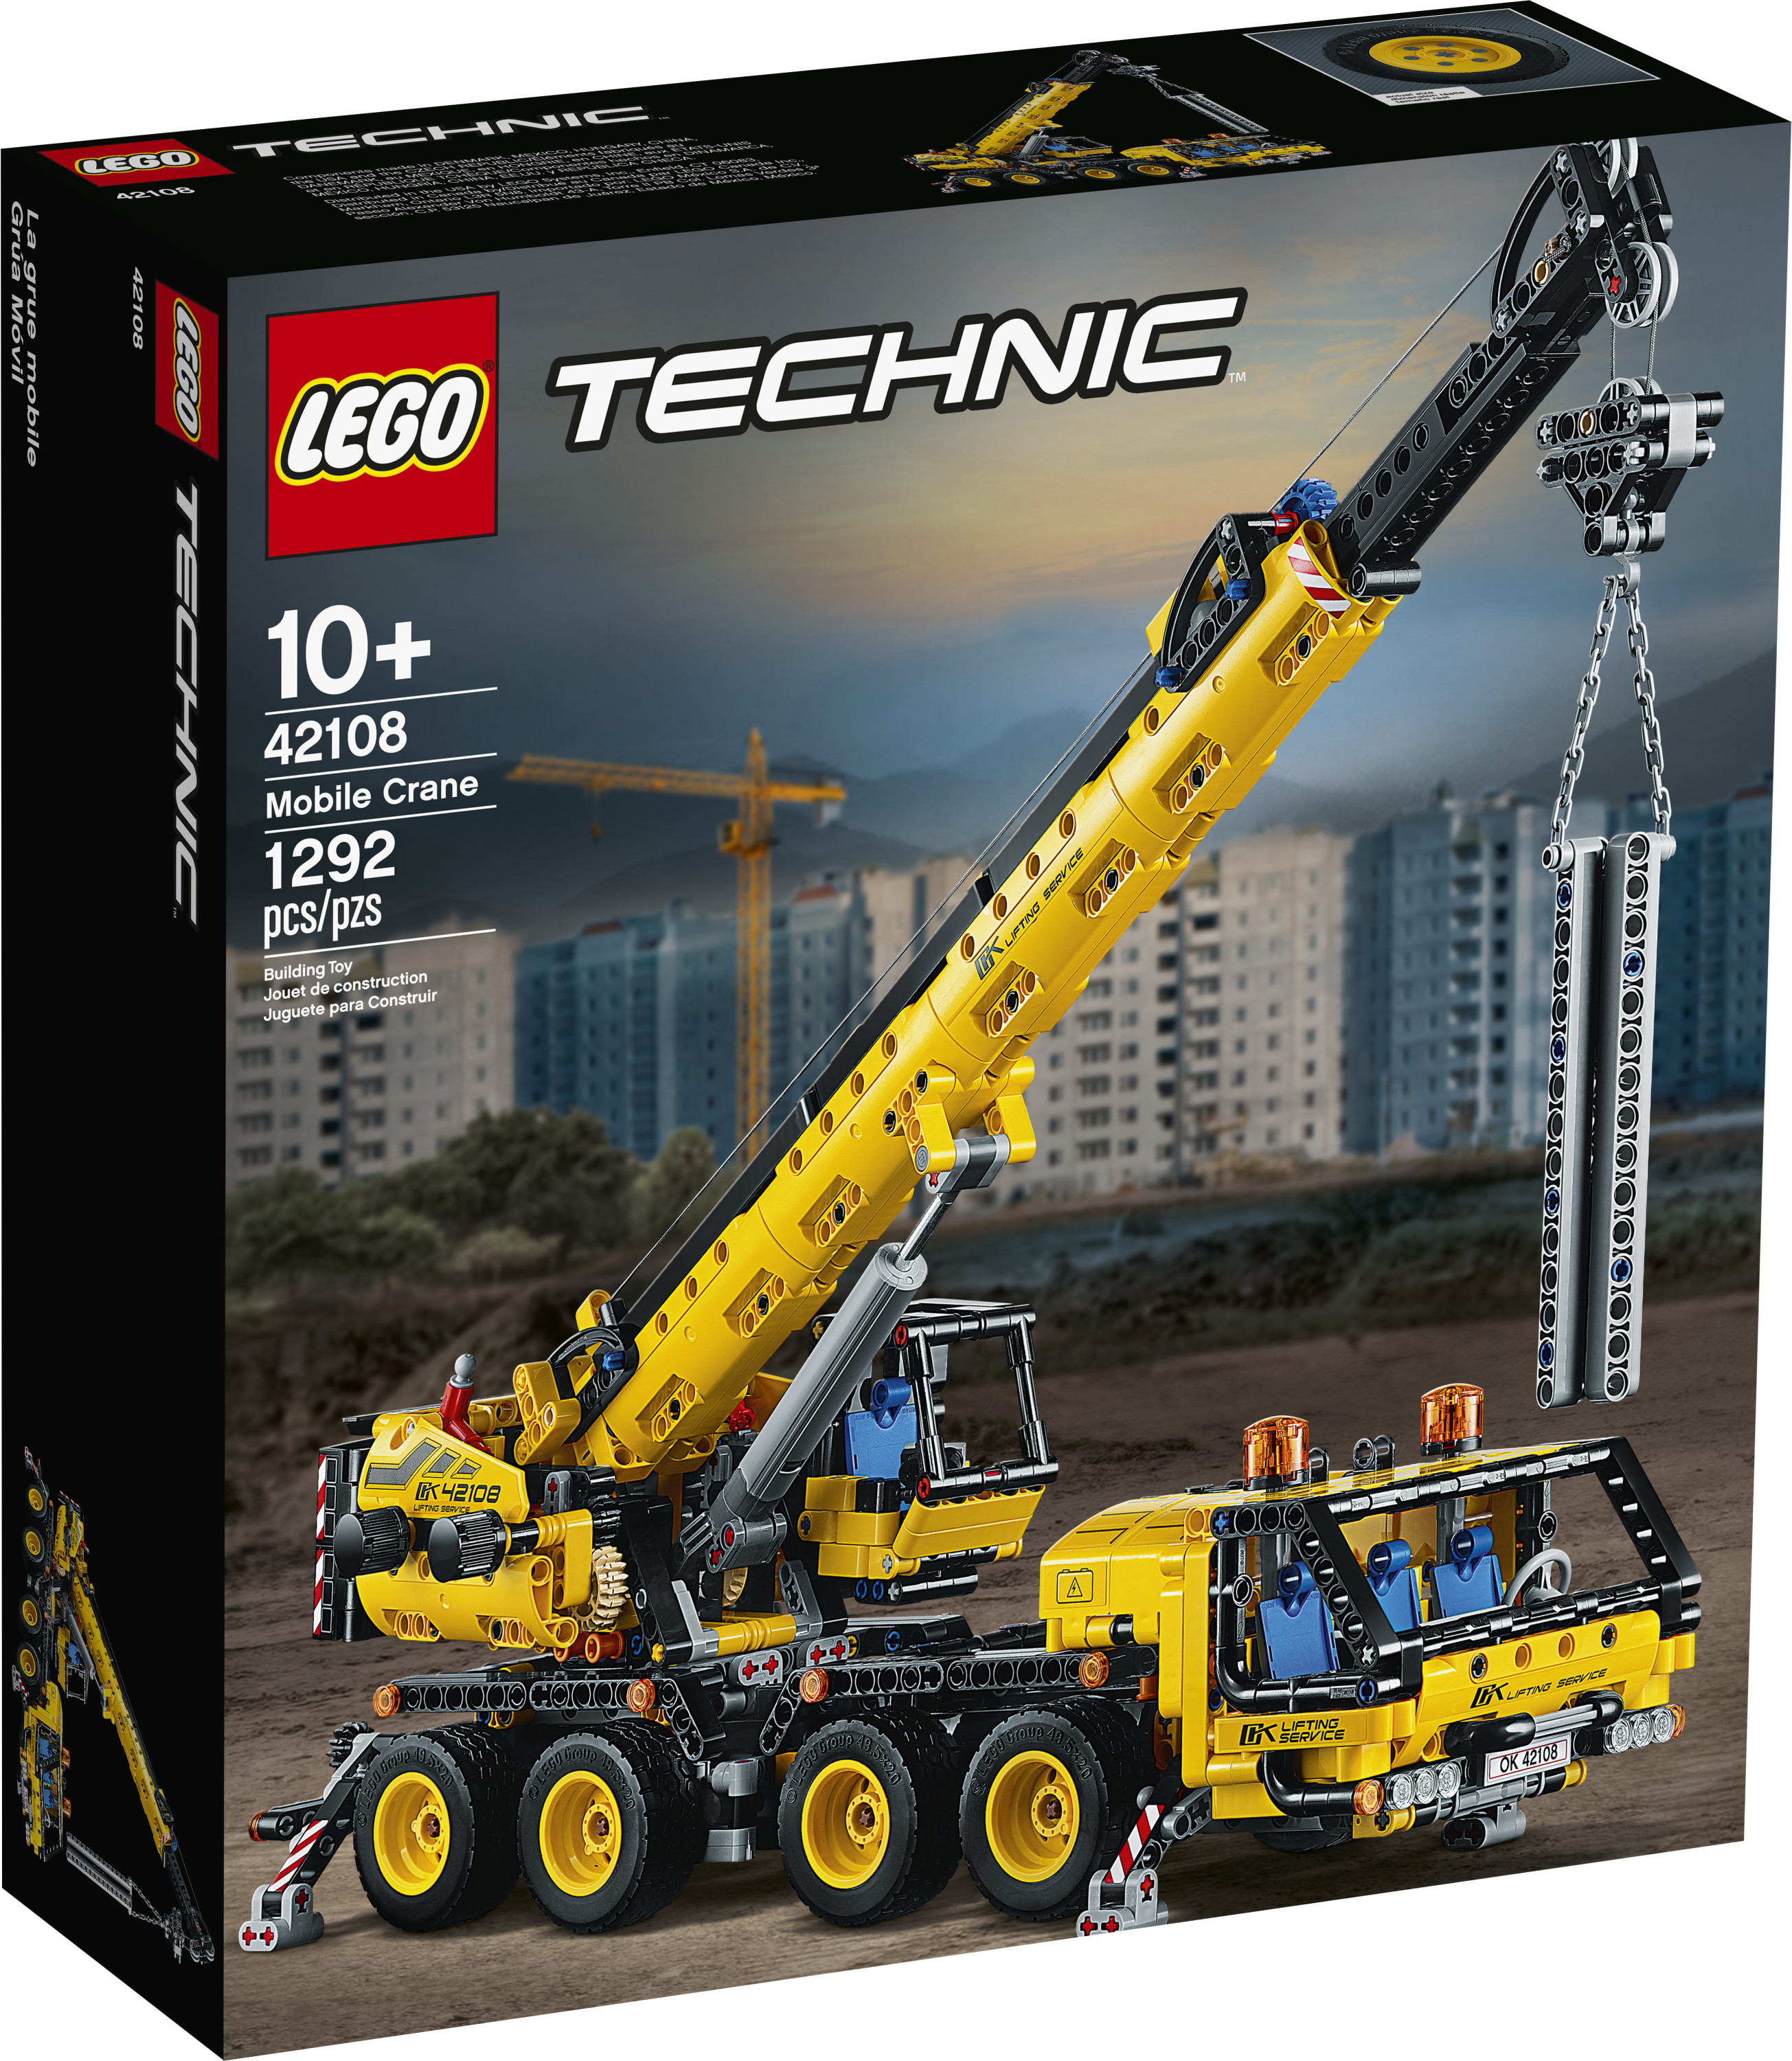 LEGO Technic Mobile Crane 42108 Construction Toy Building Kit (1,292 pieces) - image 4 of 10